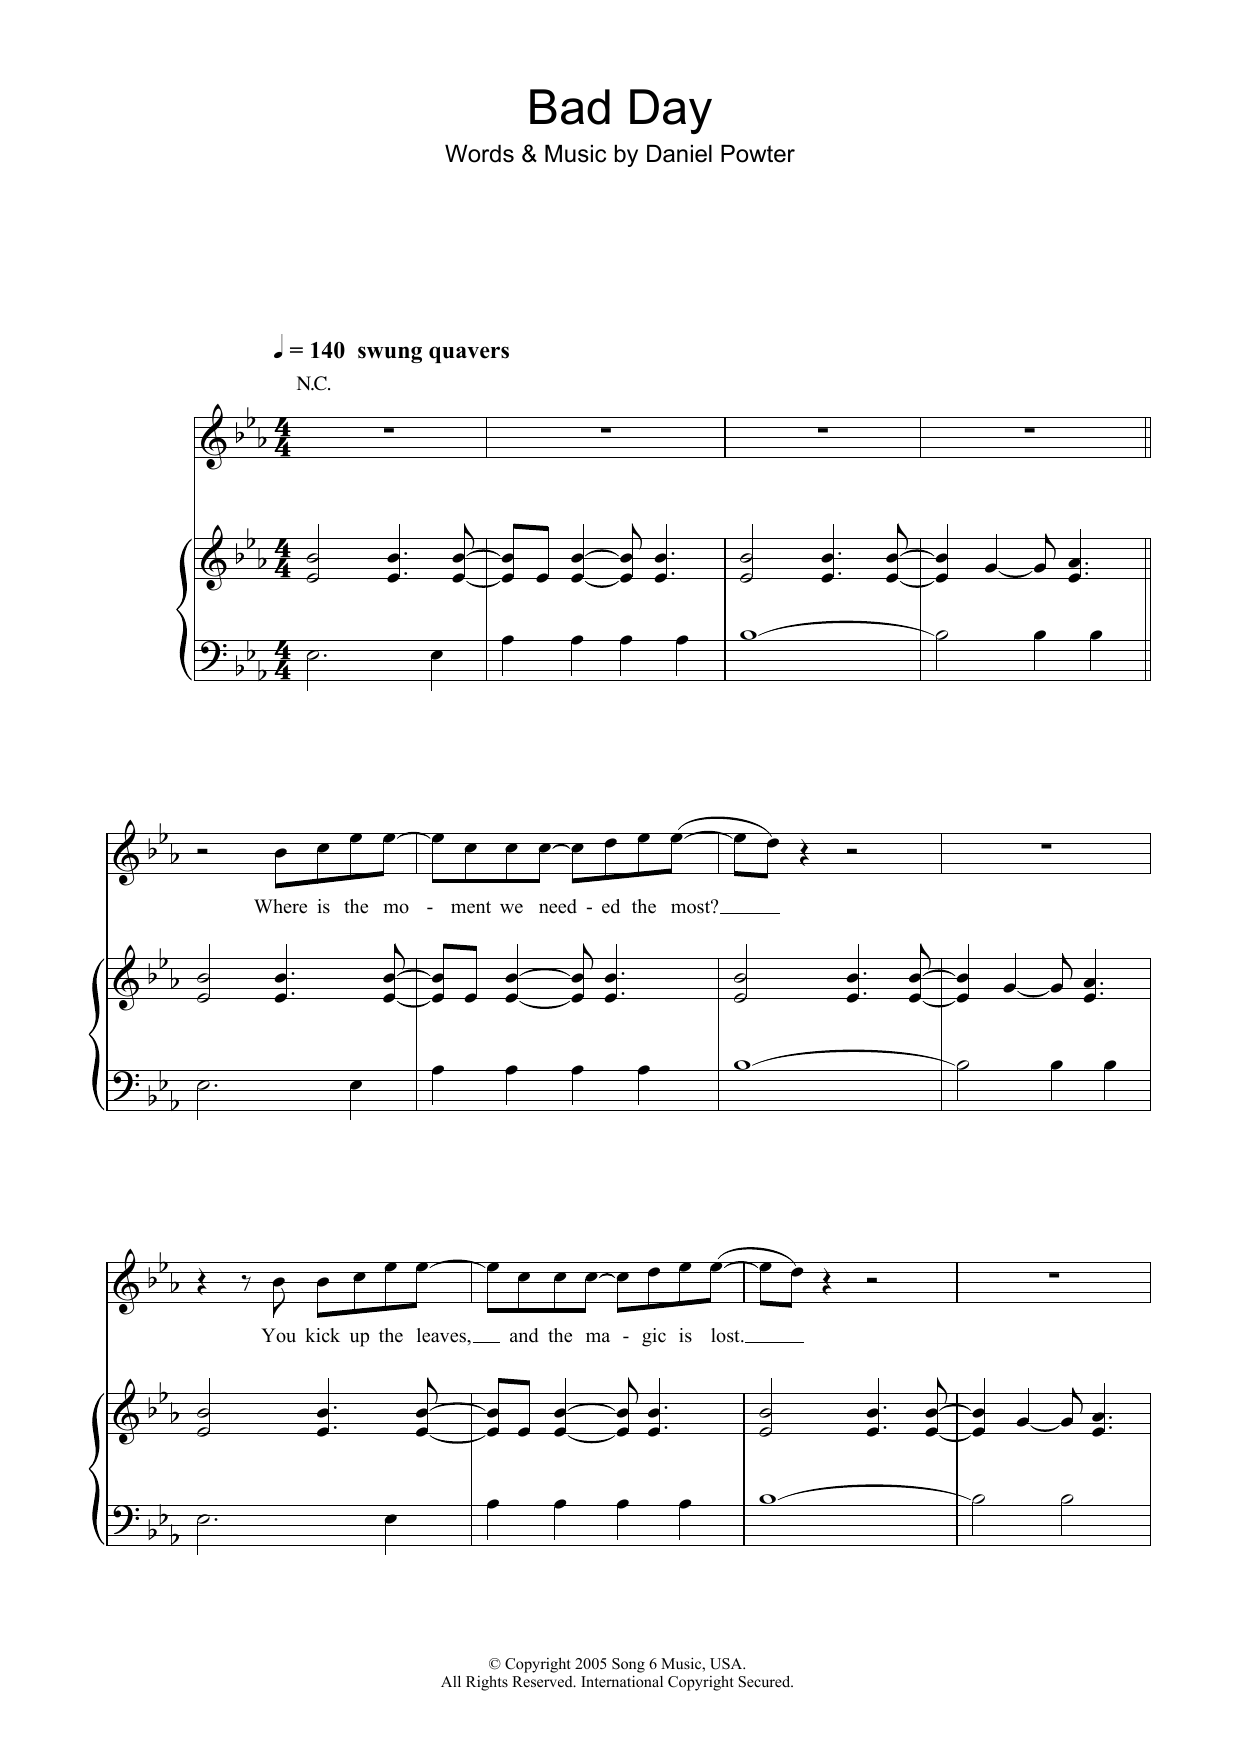 Daniel Powter Bad Day Sheet Music Notes & Chords for Viola - Download or Print PDF